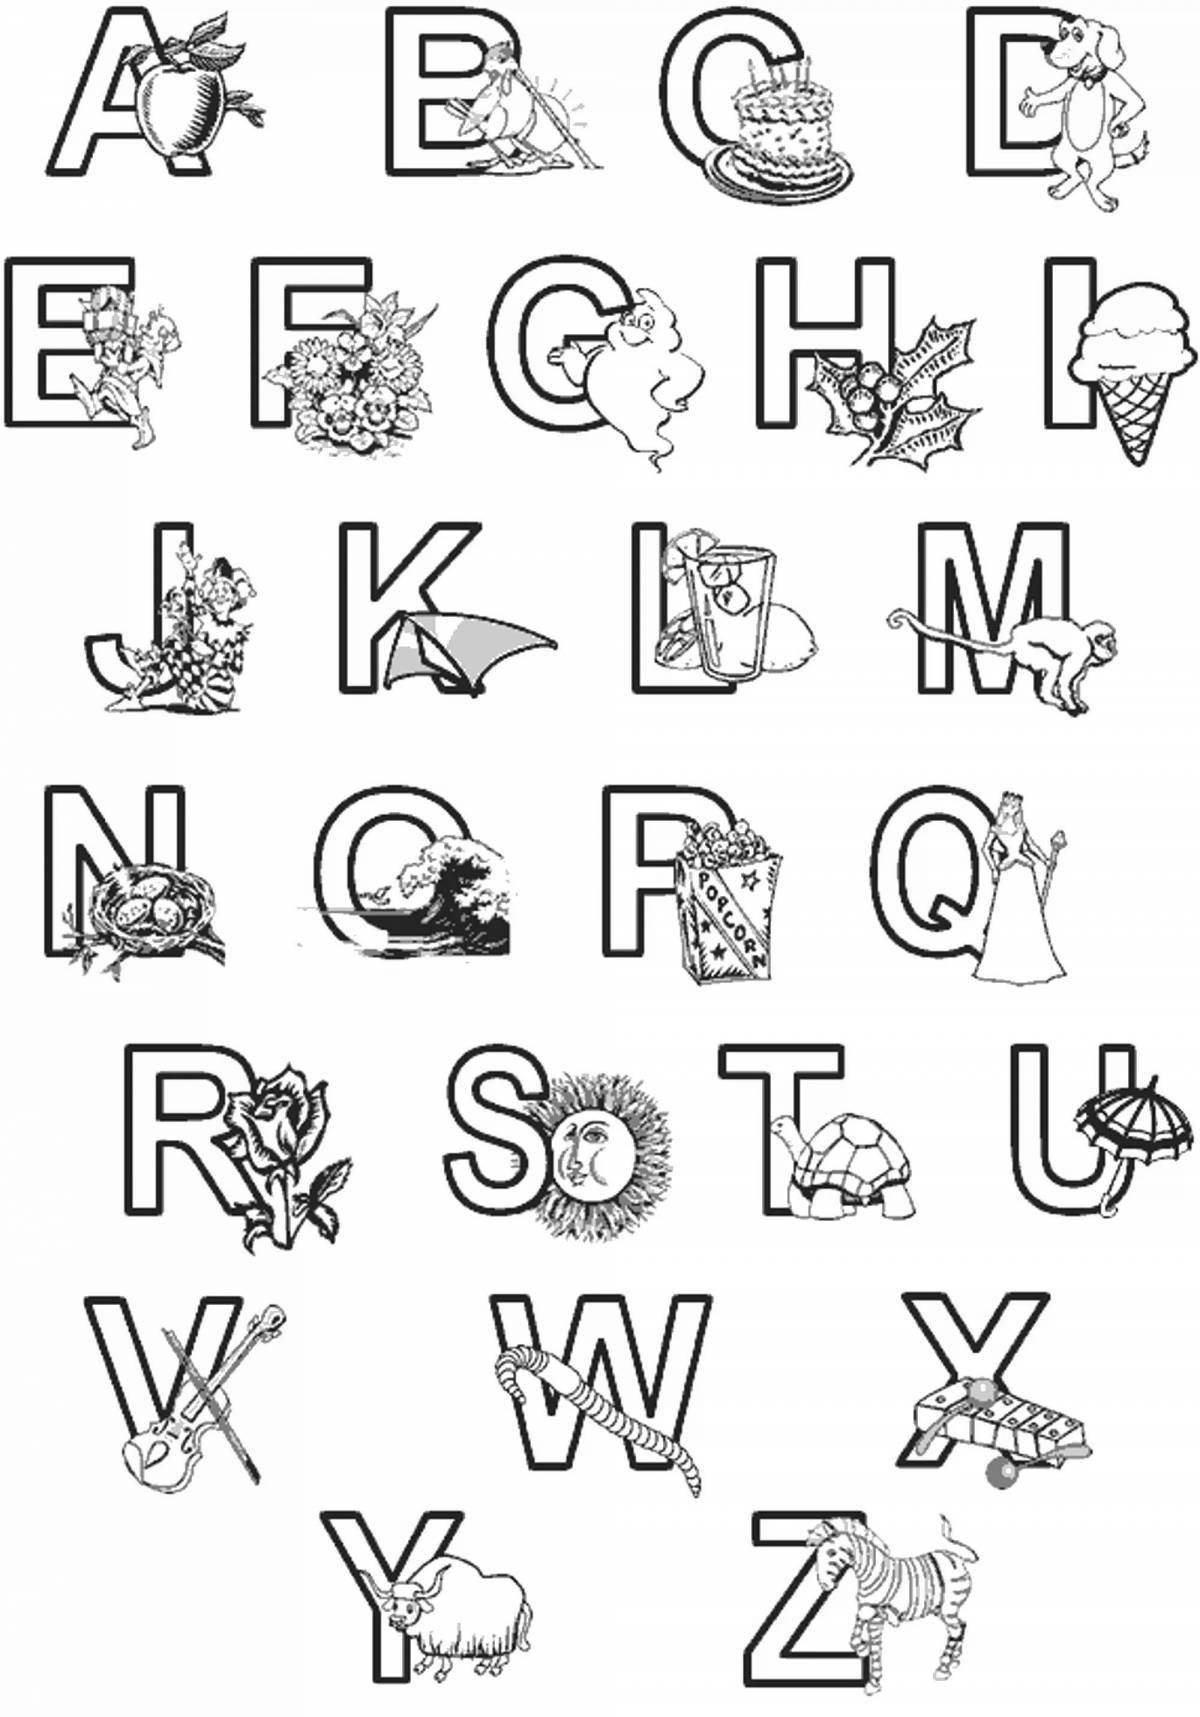 Delightful english alphabet cards